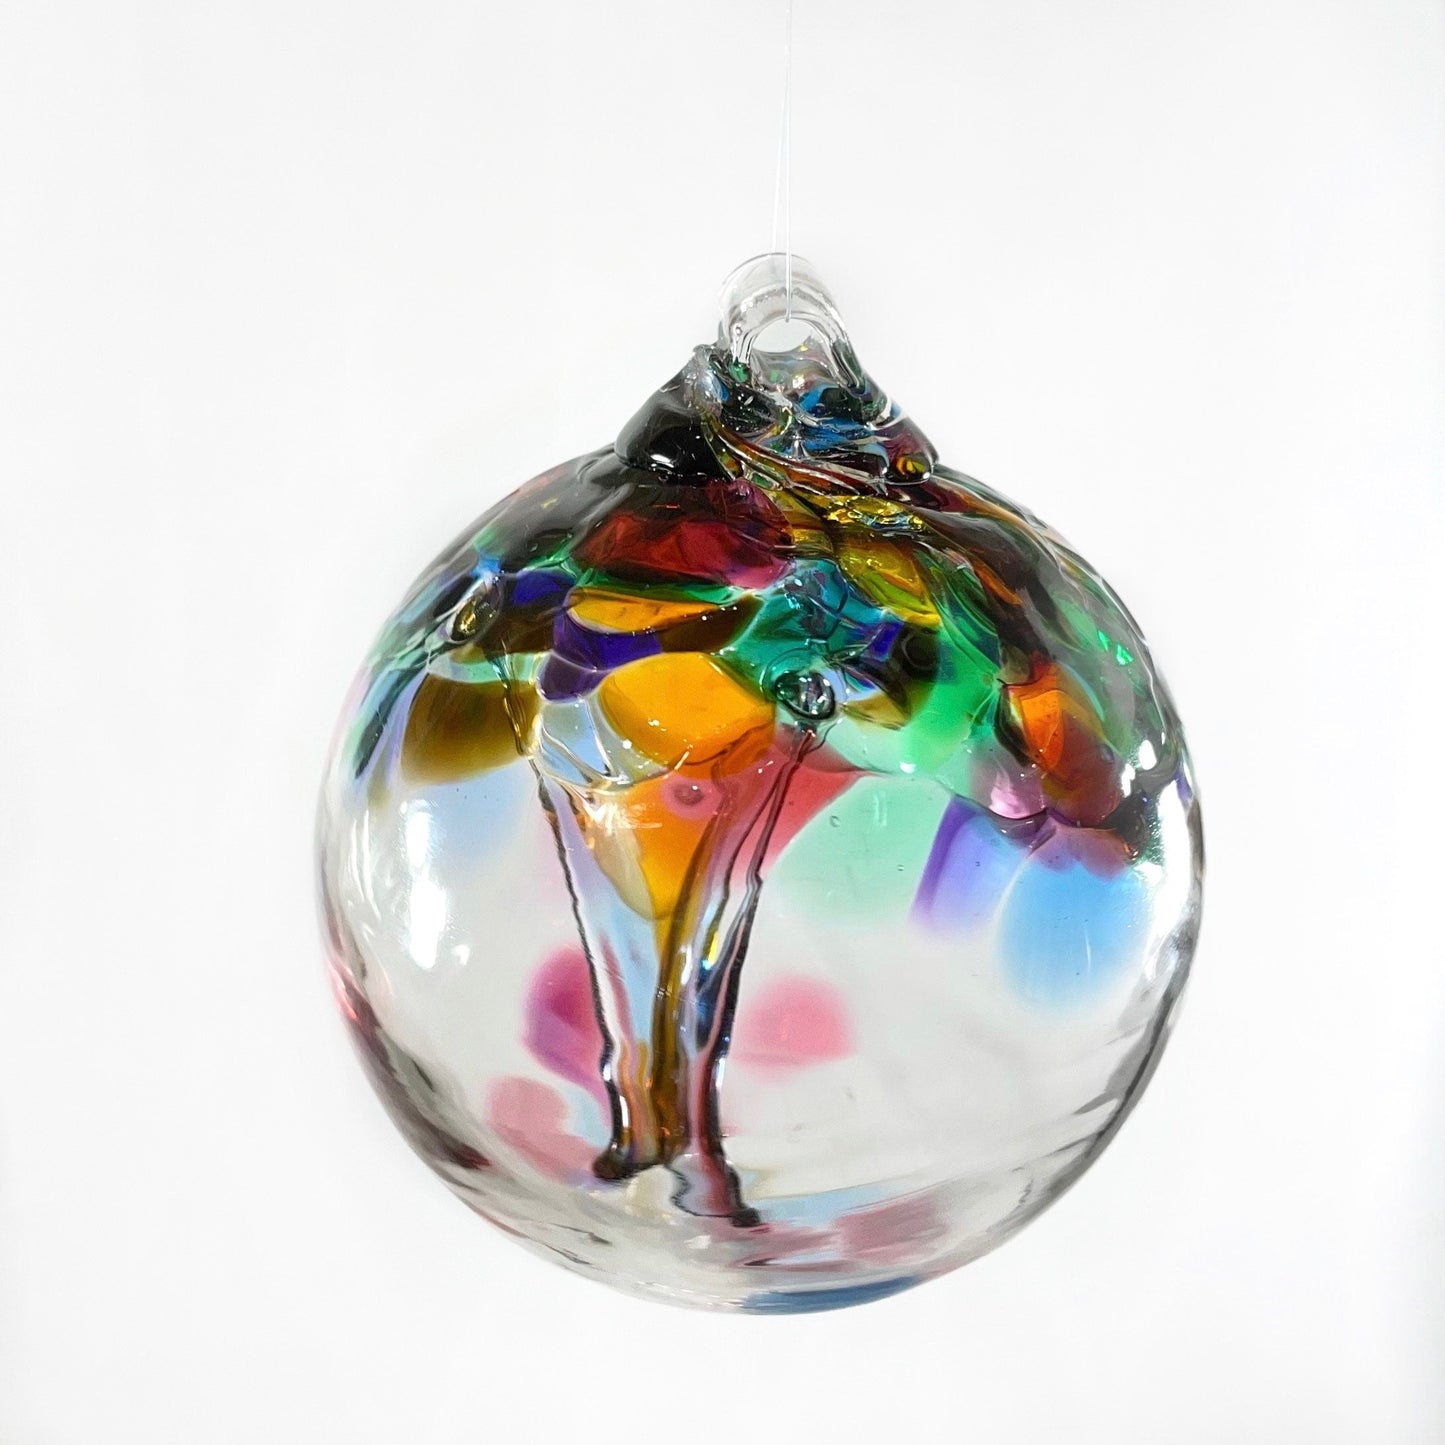 Handmade Glass Art 2” Globe Ornament - Tree of Friendship